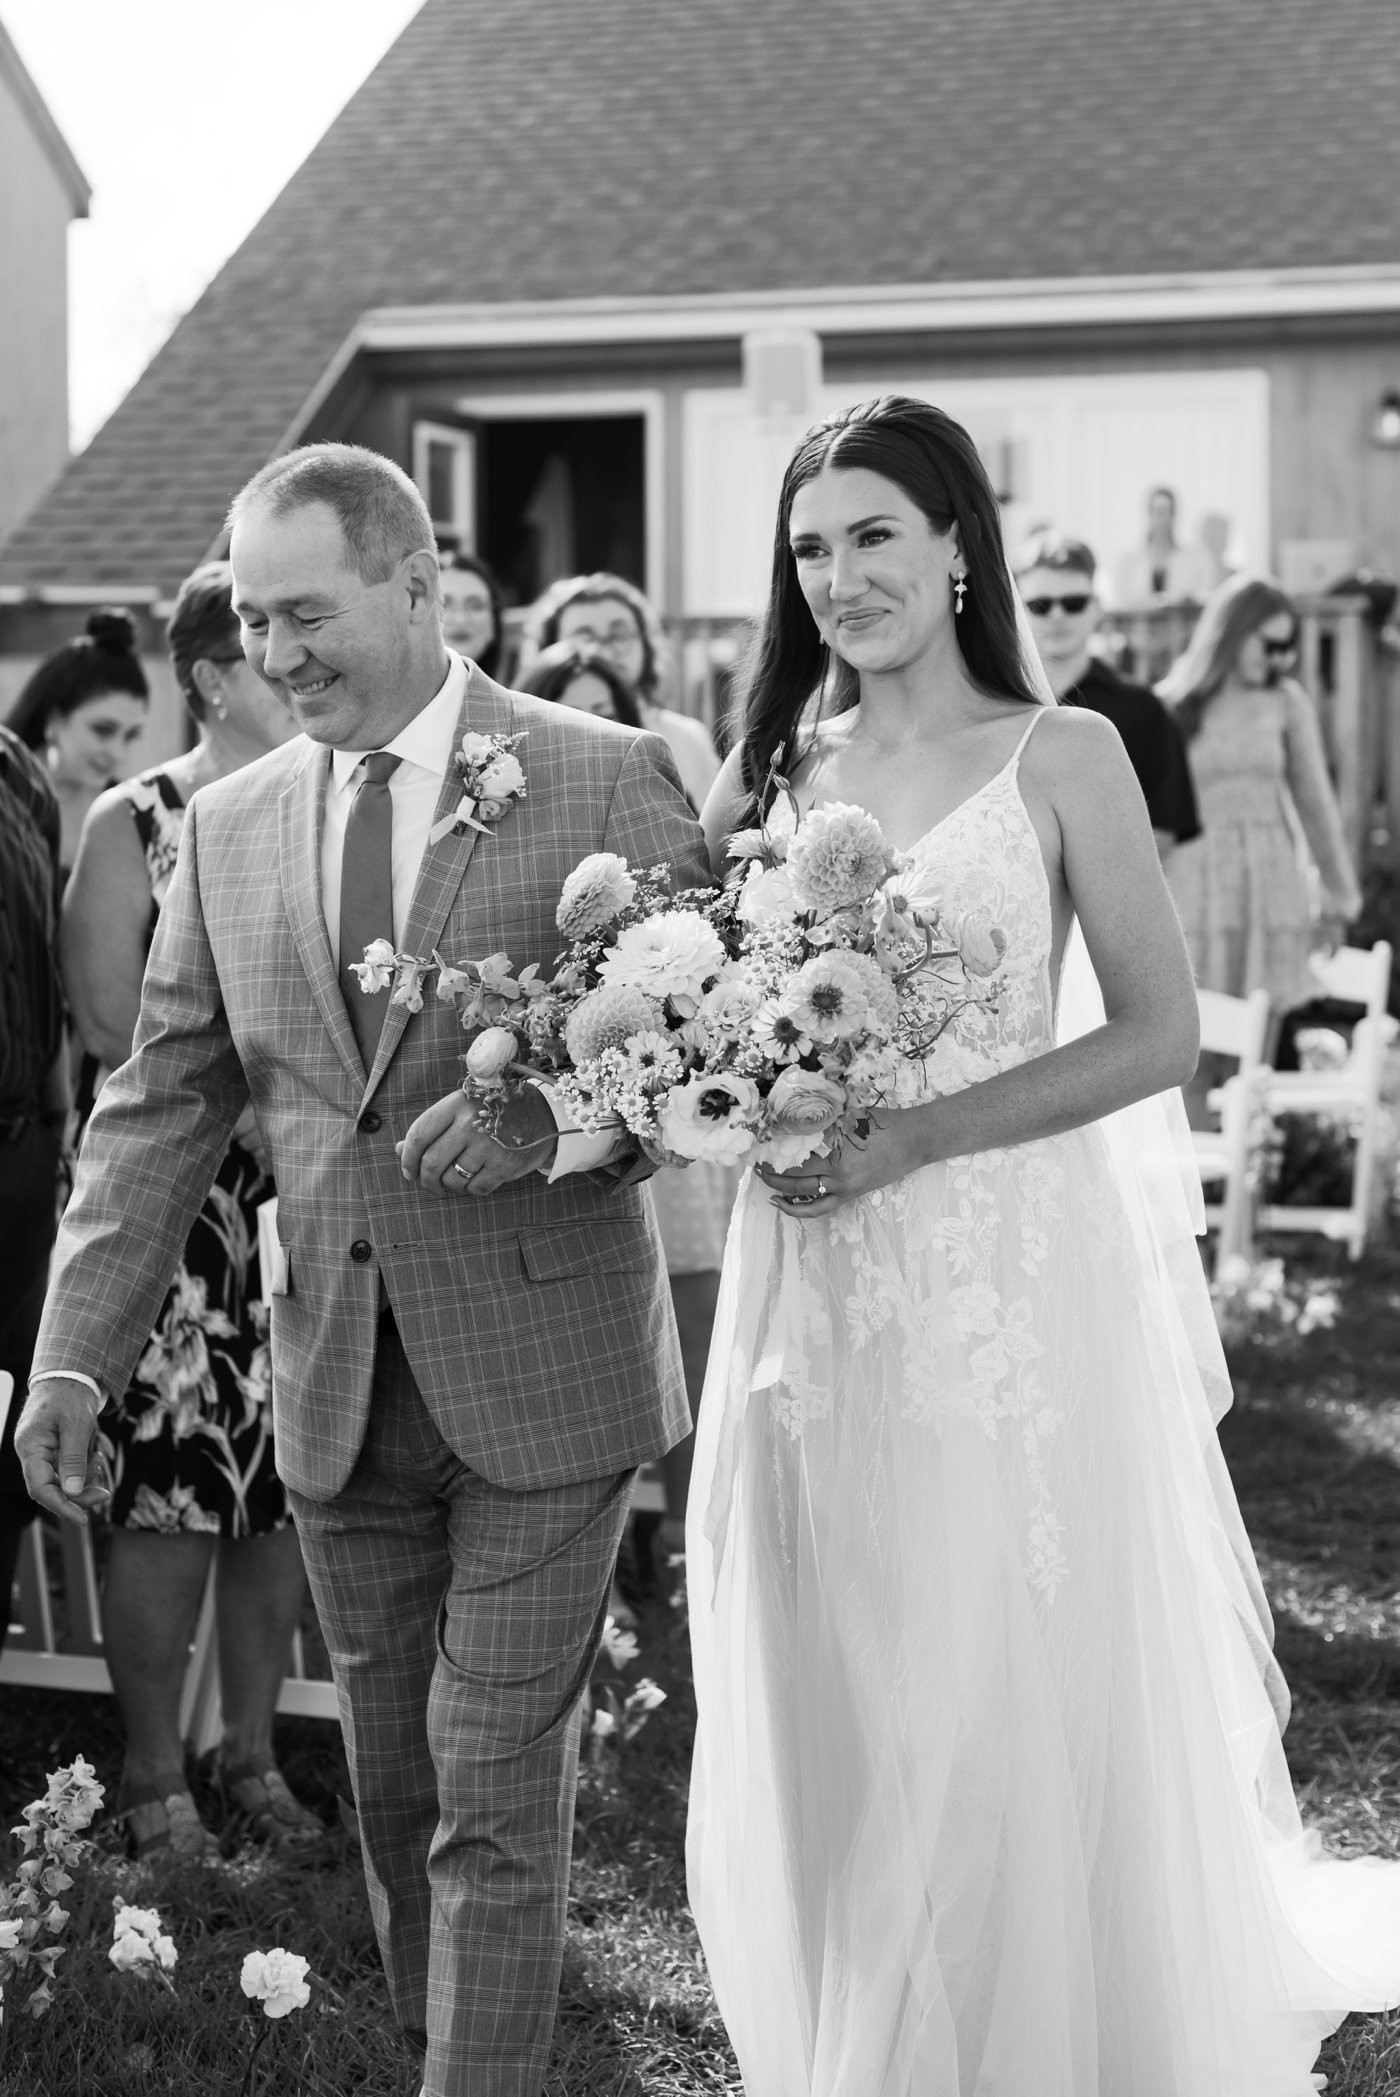 Alyssa Joy - Nova Scotia Wedding Photographer